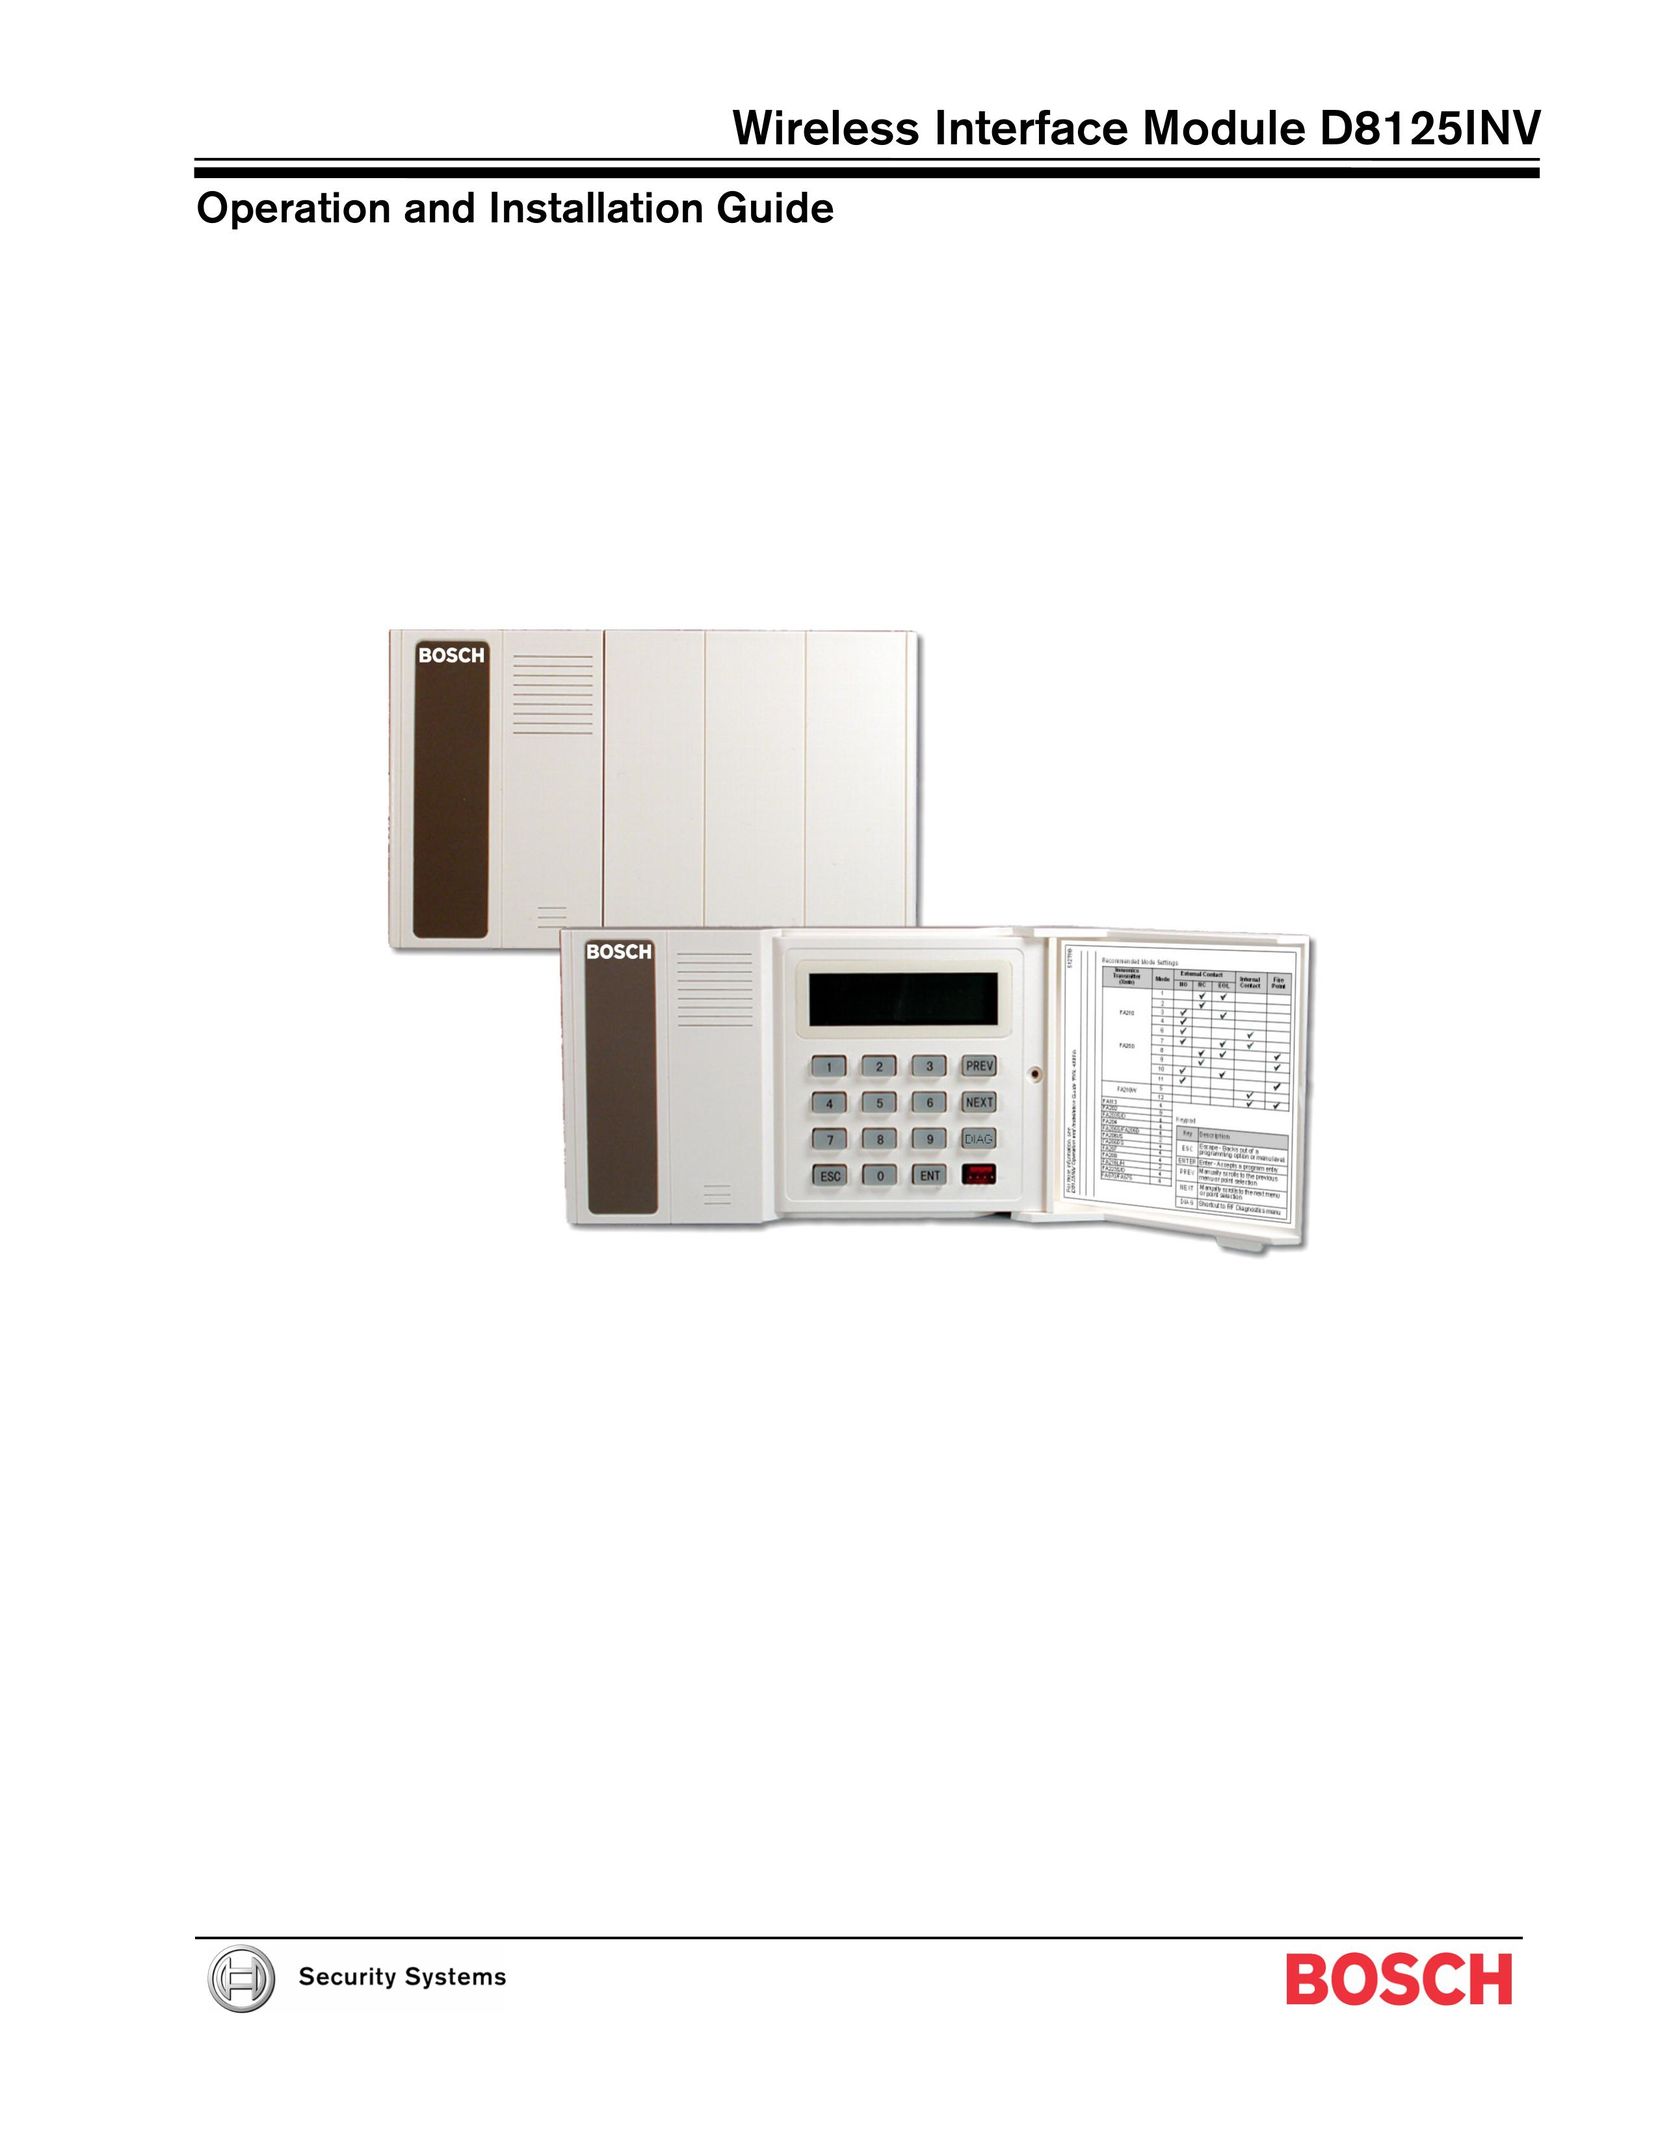 Bosch Appliances D8125INV Network Card User Manual